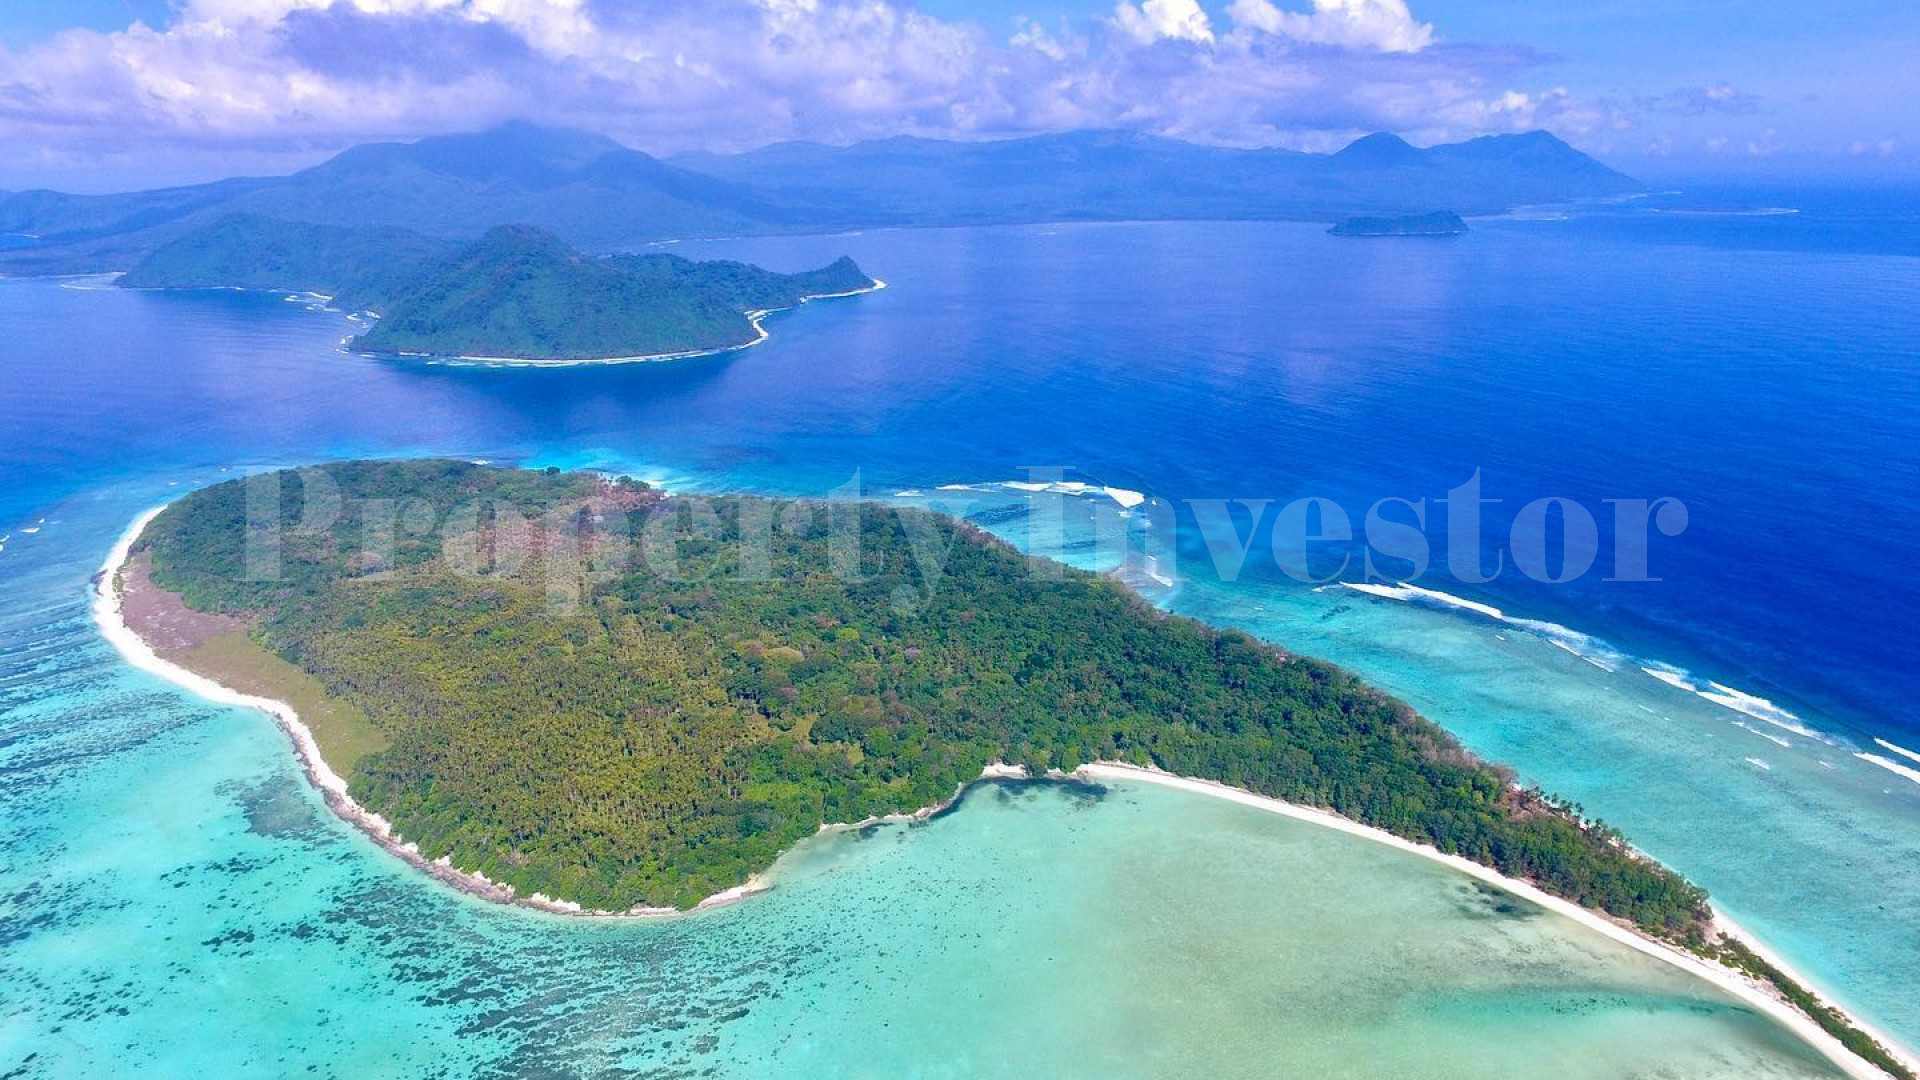 Majestic 108 Hectare Private Island for Sale in Vanuatu